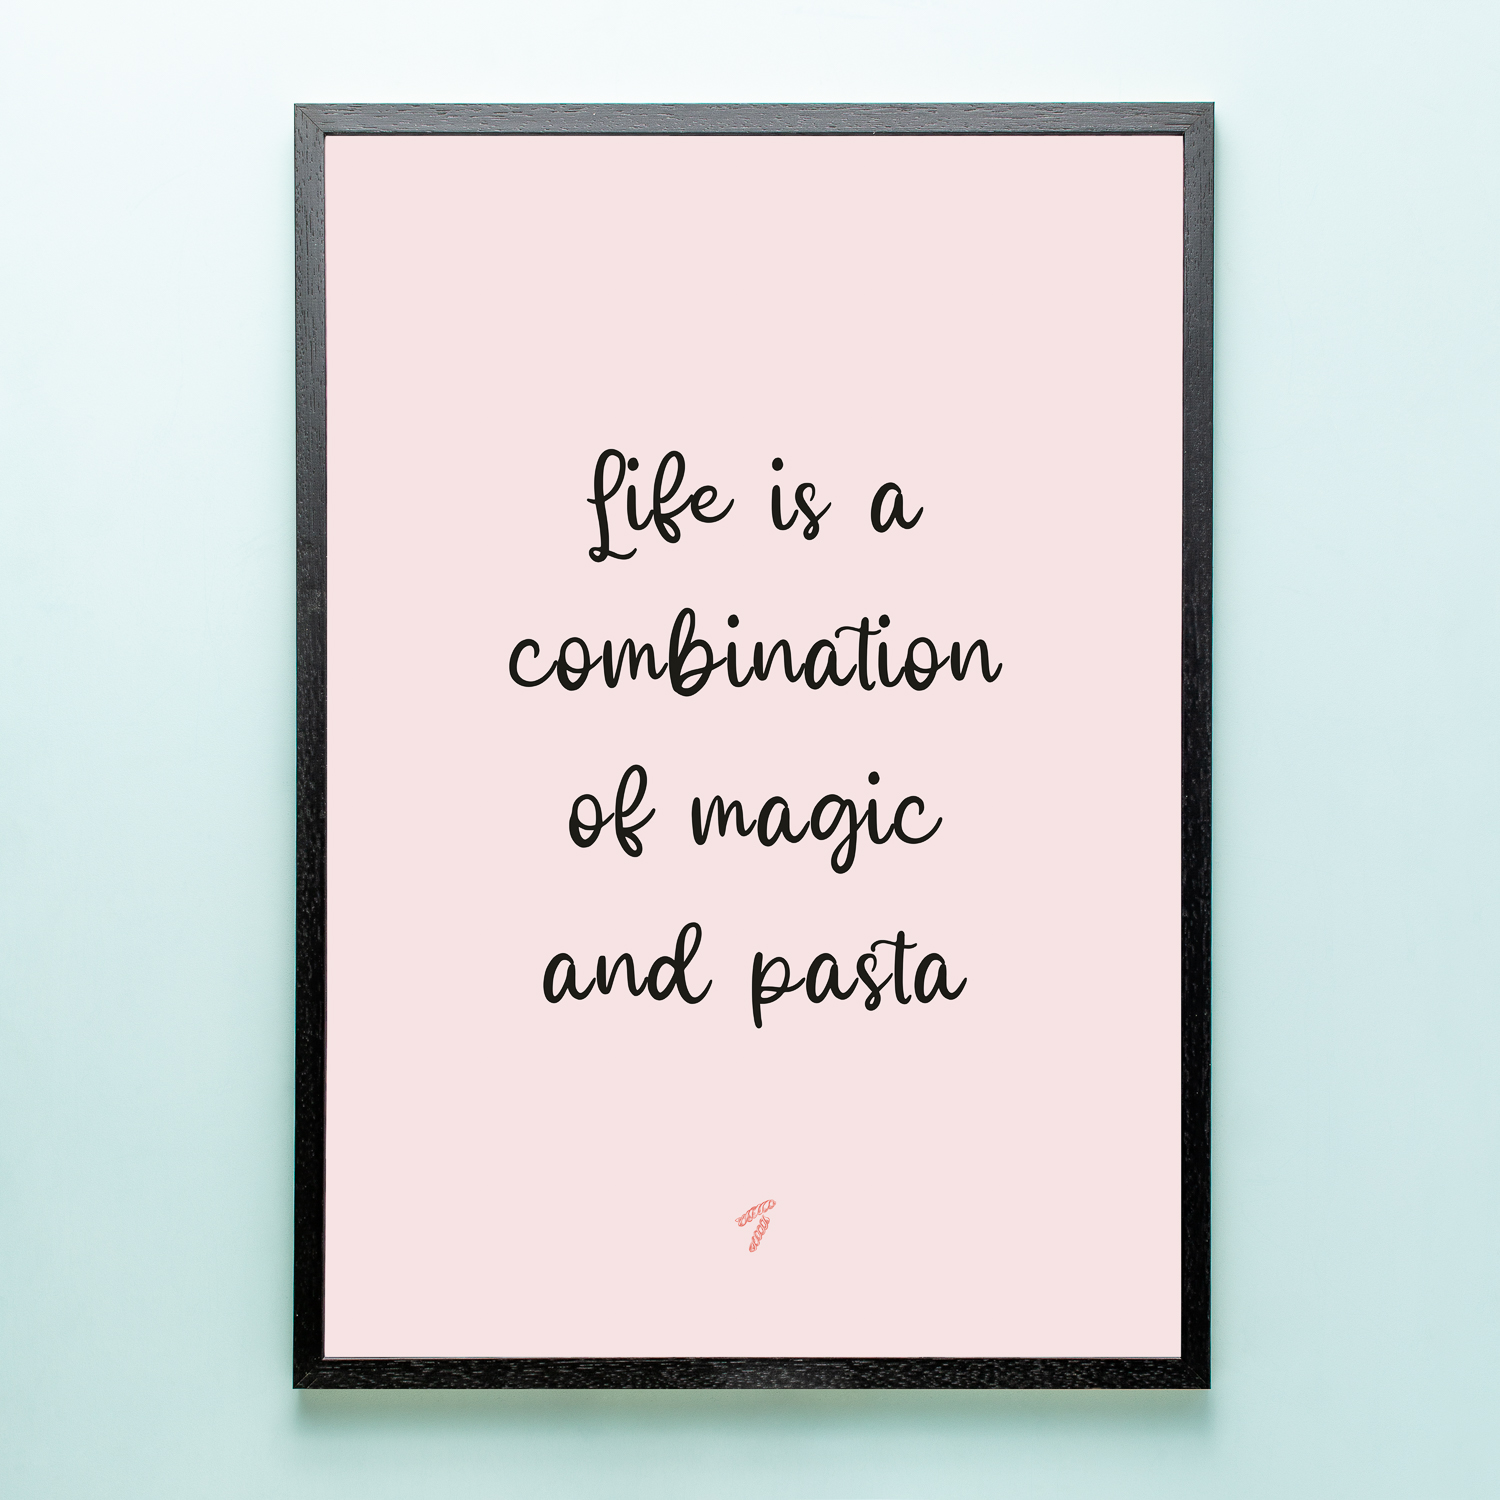 Poster Magic And Pasta (A2 Formaat)